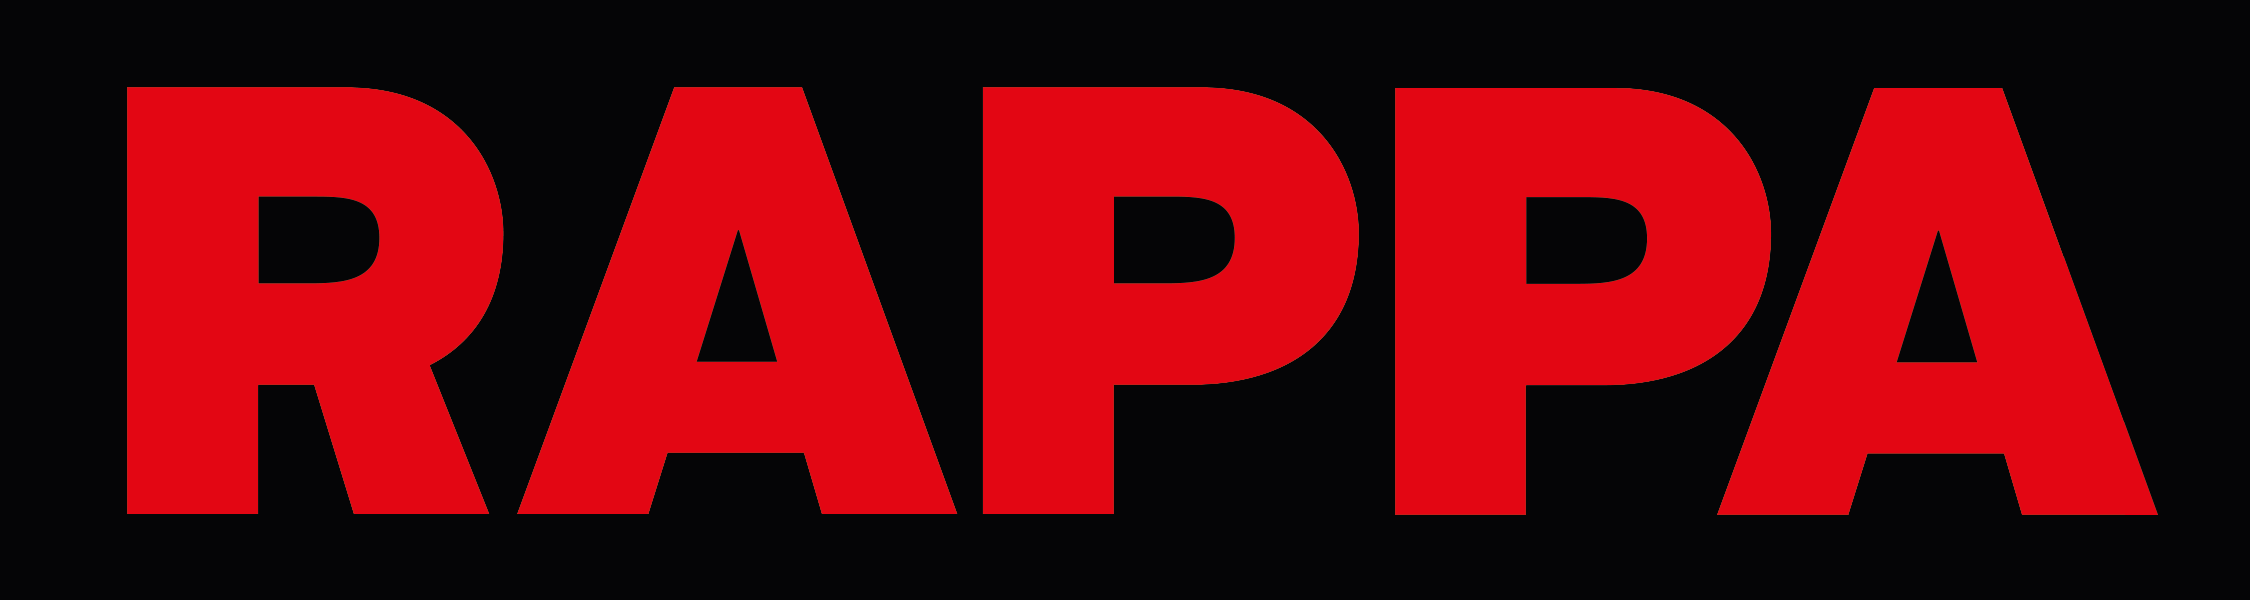 Rappa sponsor logo